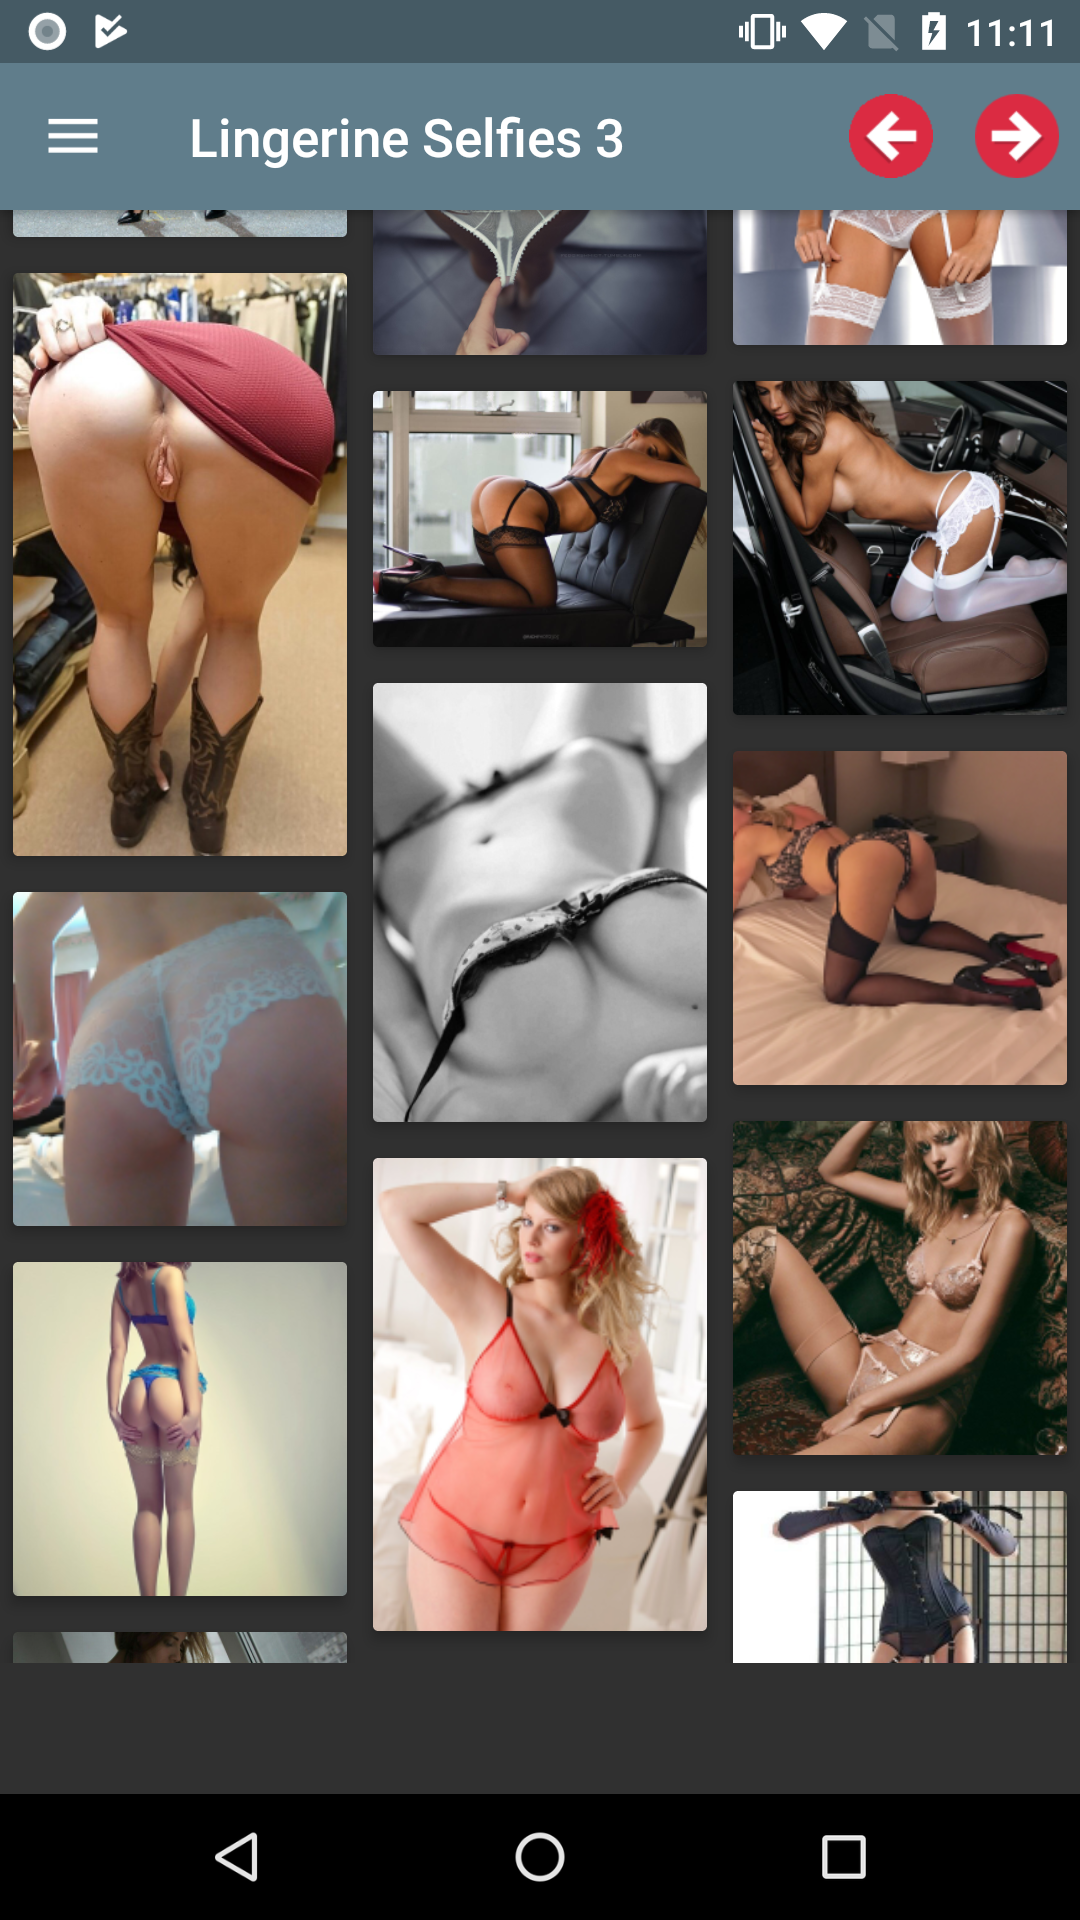 Lingerie selfies 2 top,tits,hentai,amateur,pics,free,lingerine,pegging,futanari,image,photos,gallery,edit,apk,girls,images,galleries,photo,manga,downloader,daily,sex,app,porn